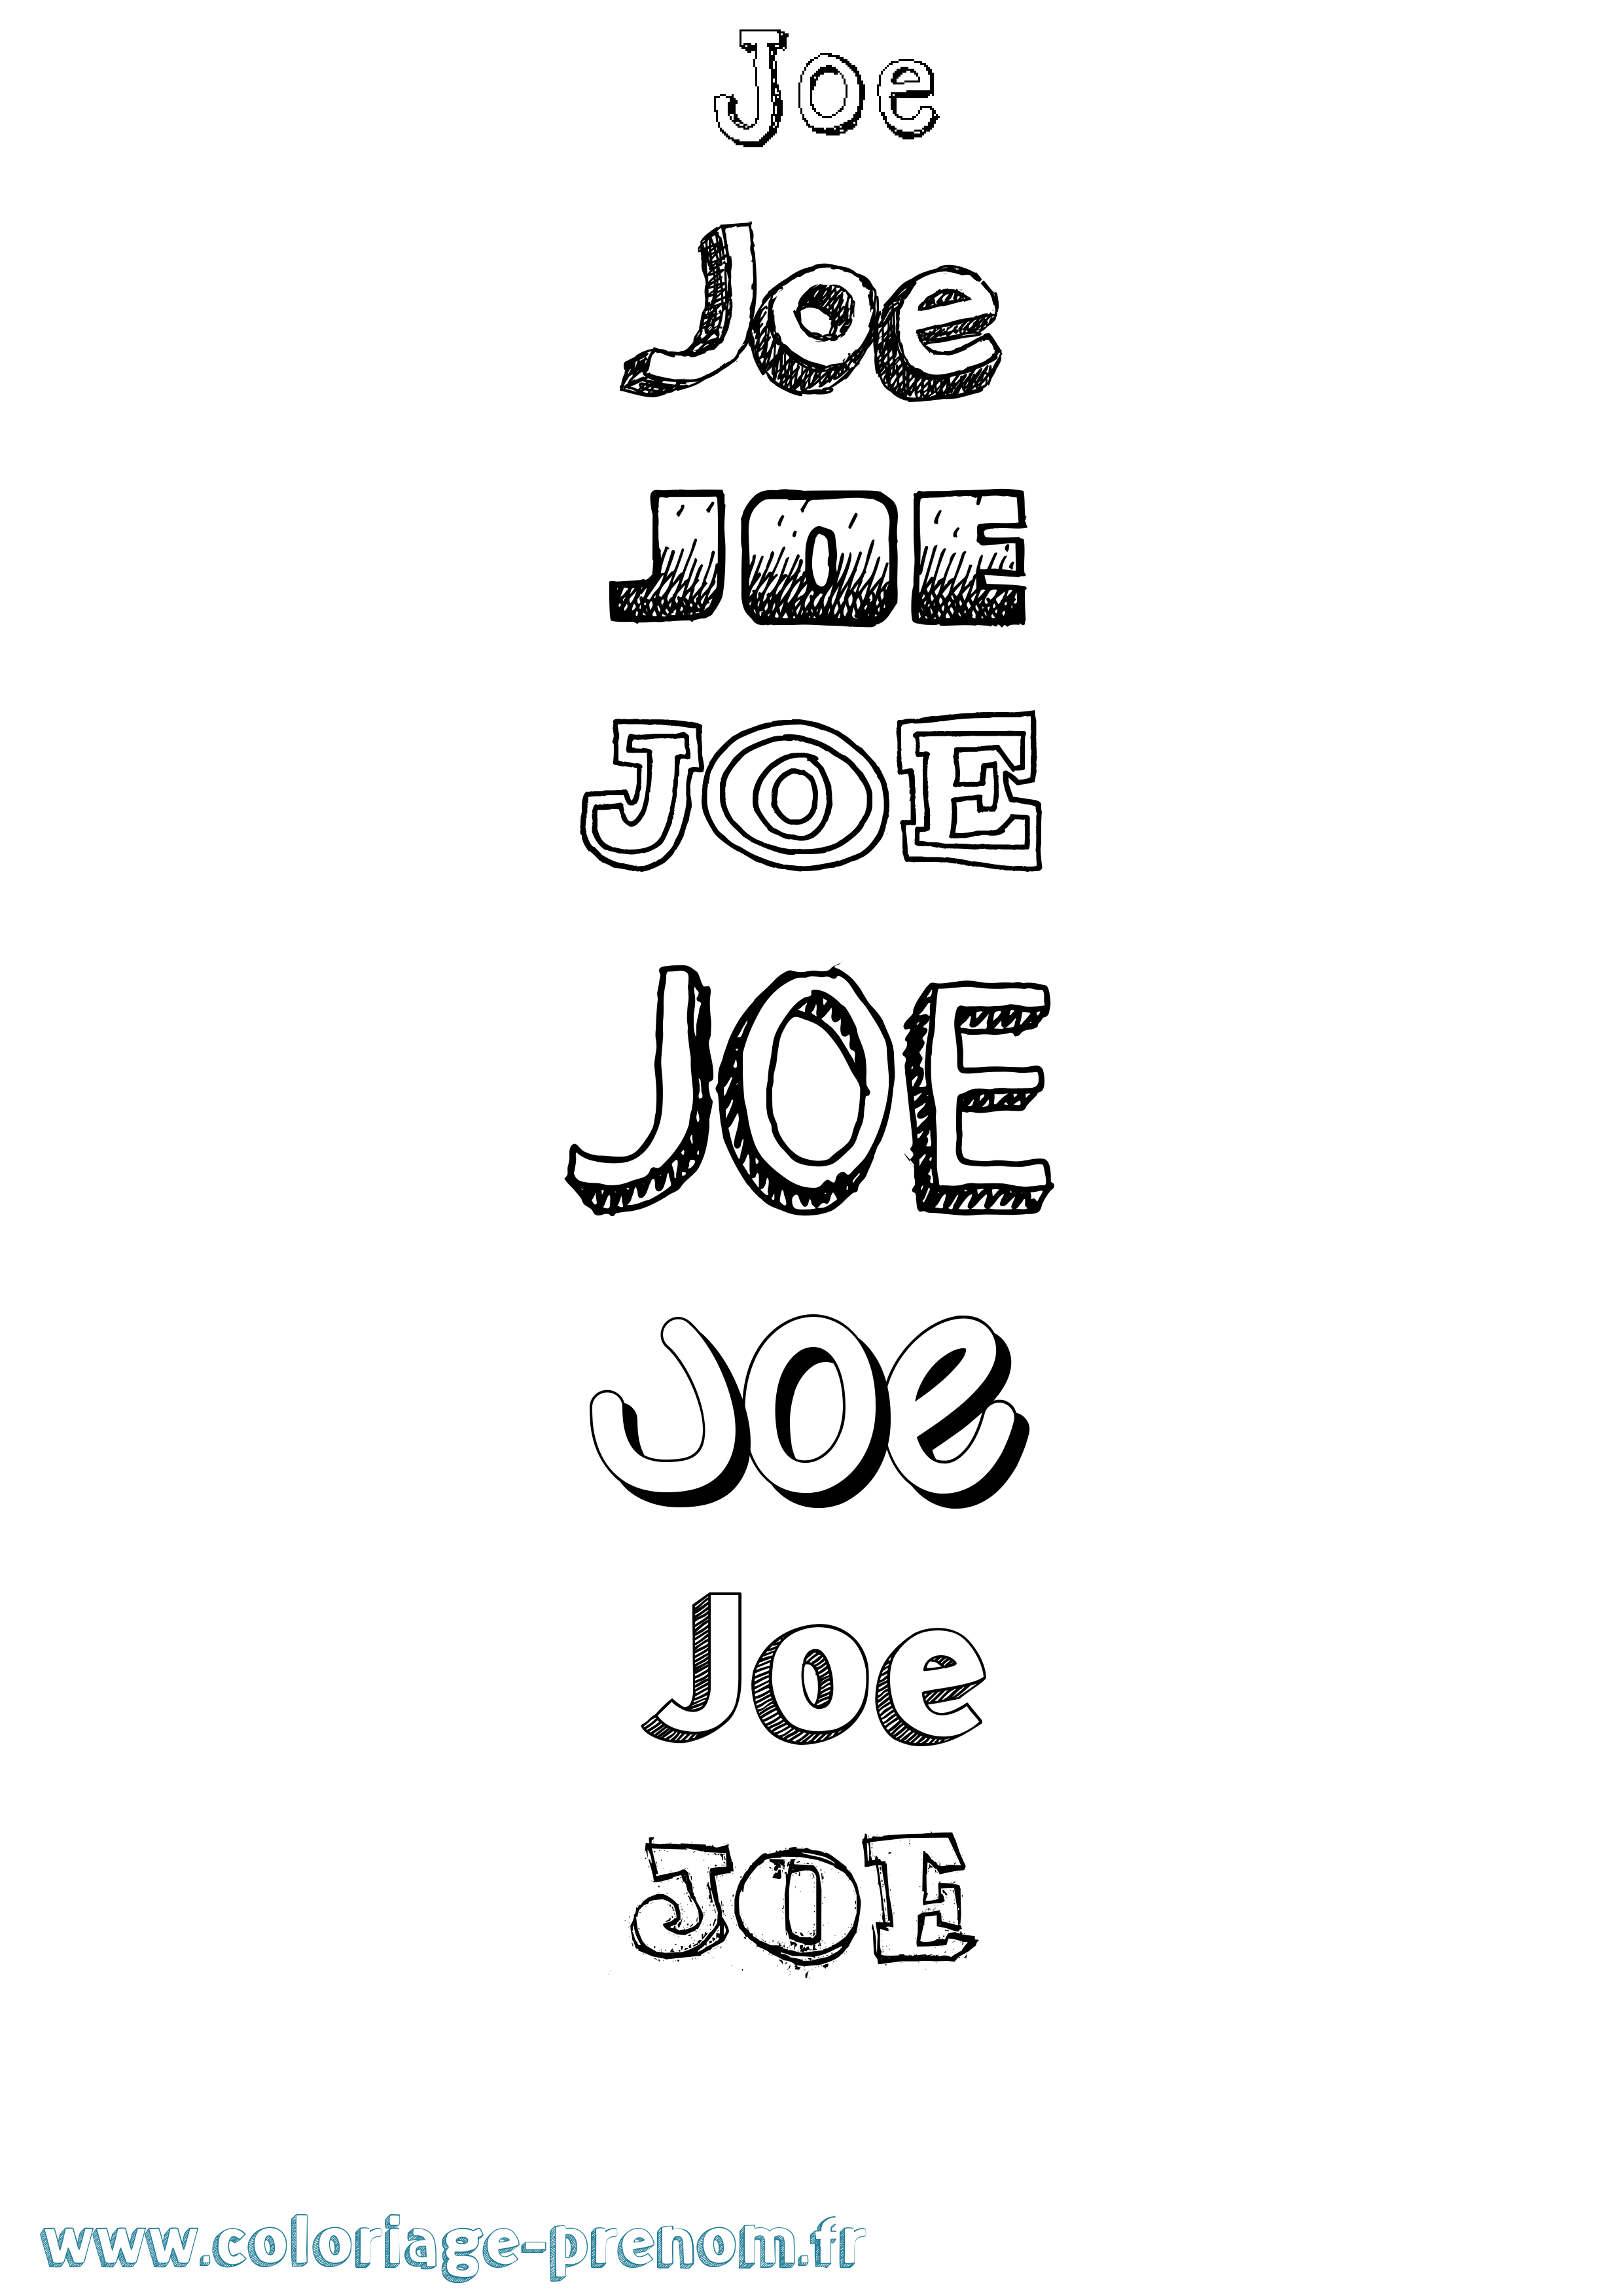 Coloriage prénom Joe